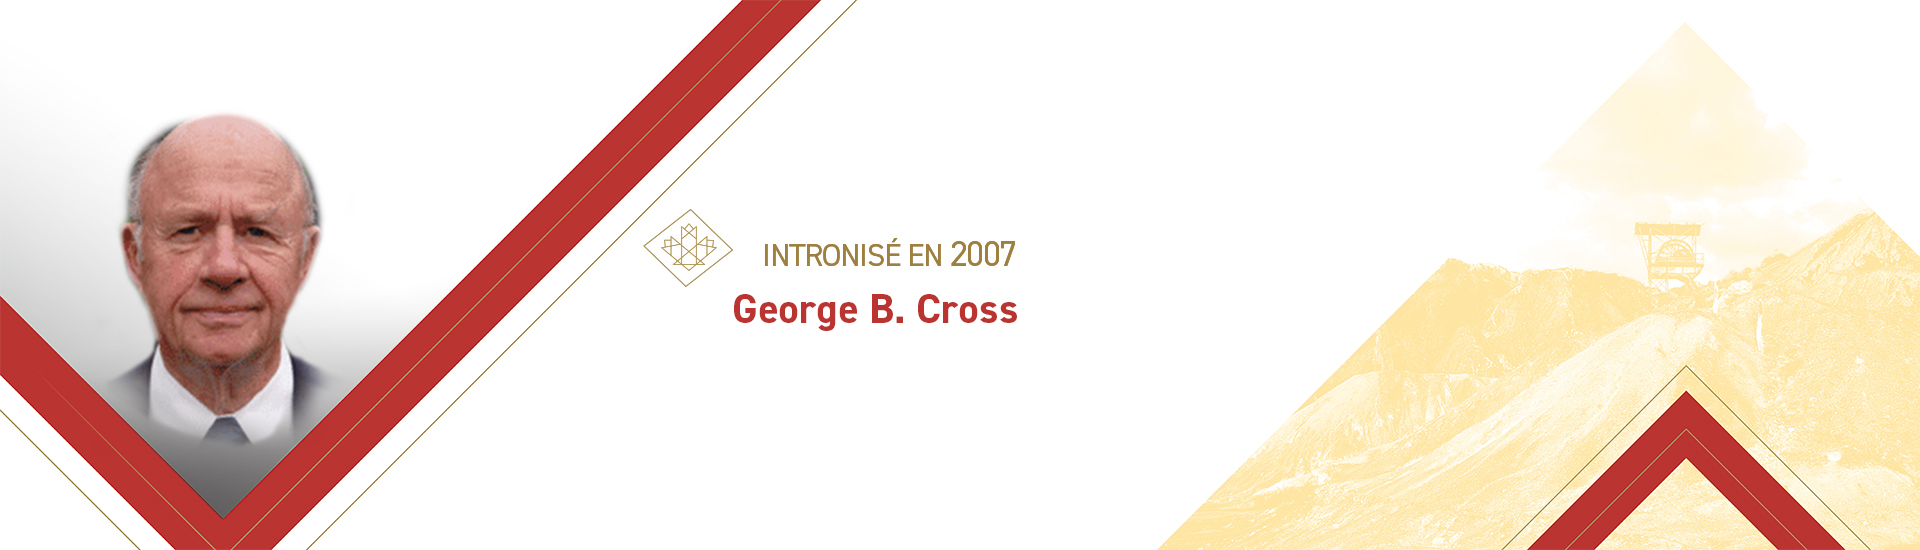 George B. Cross (b. 1932)